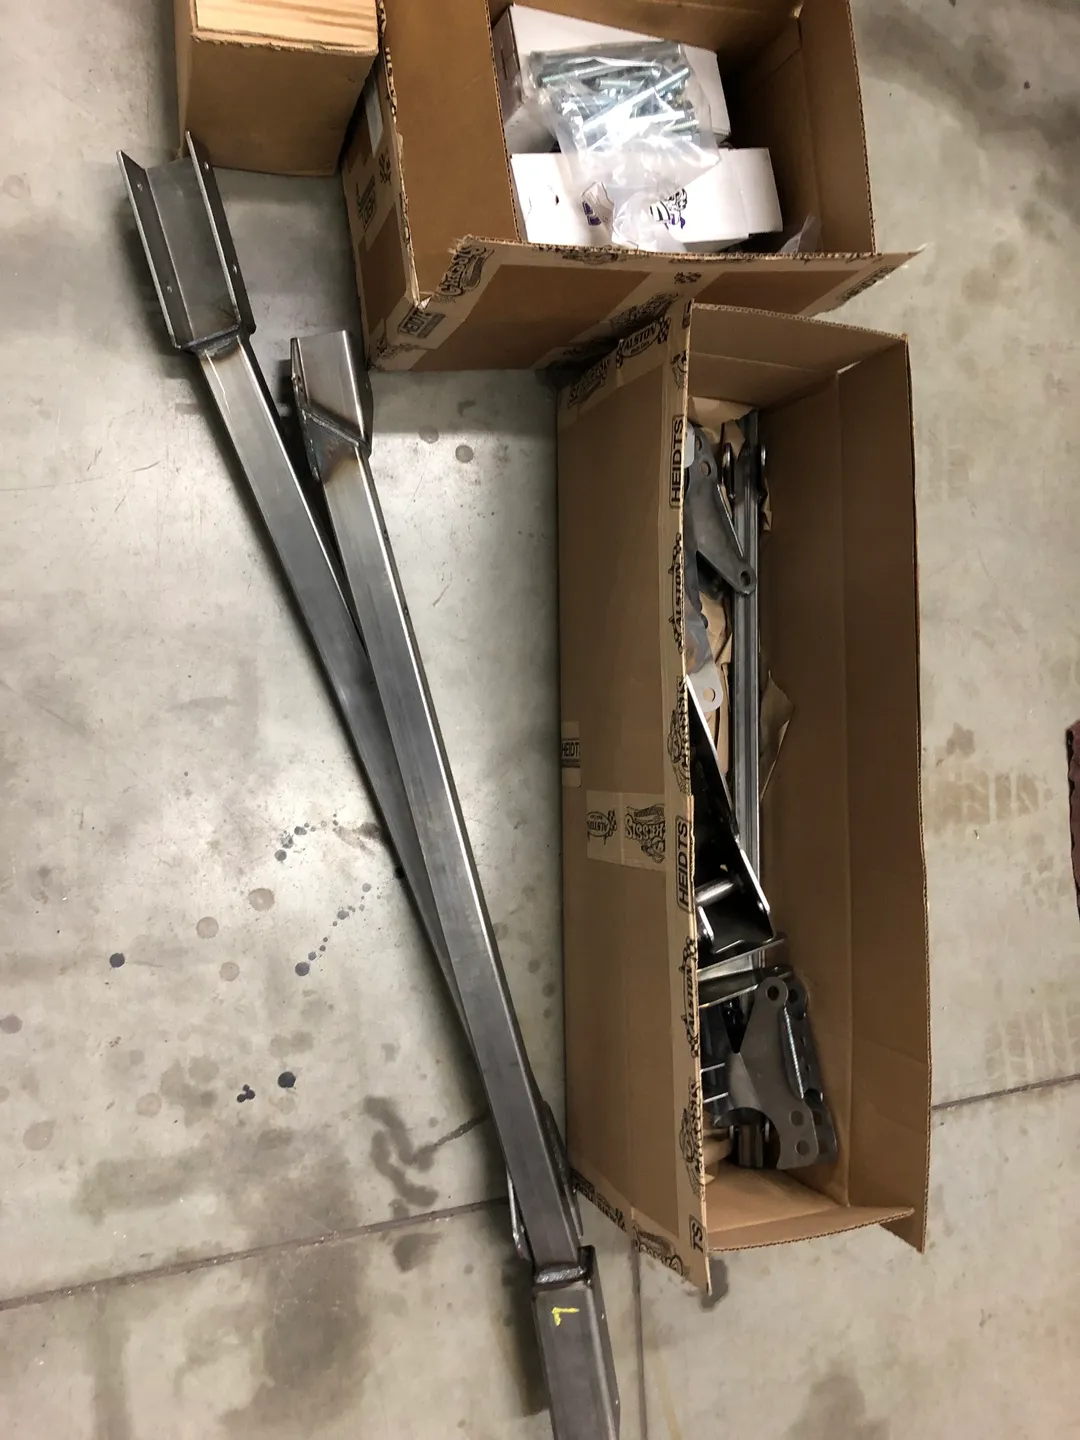 A bunch of long metal car parts inside a box